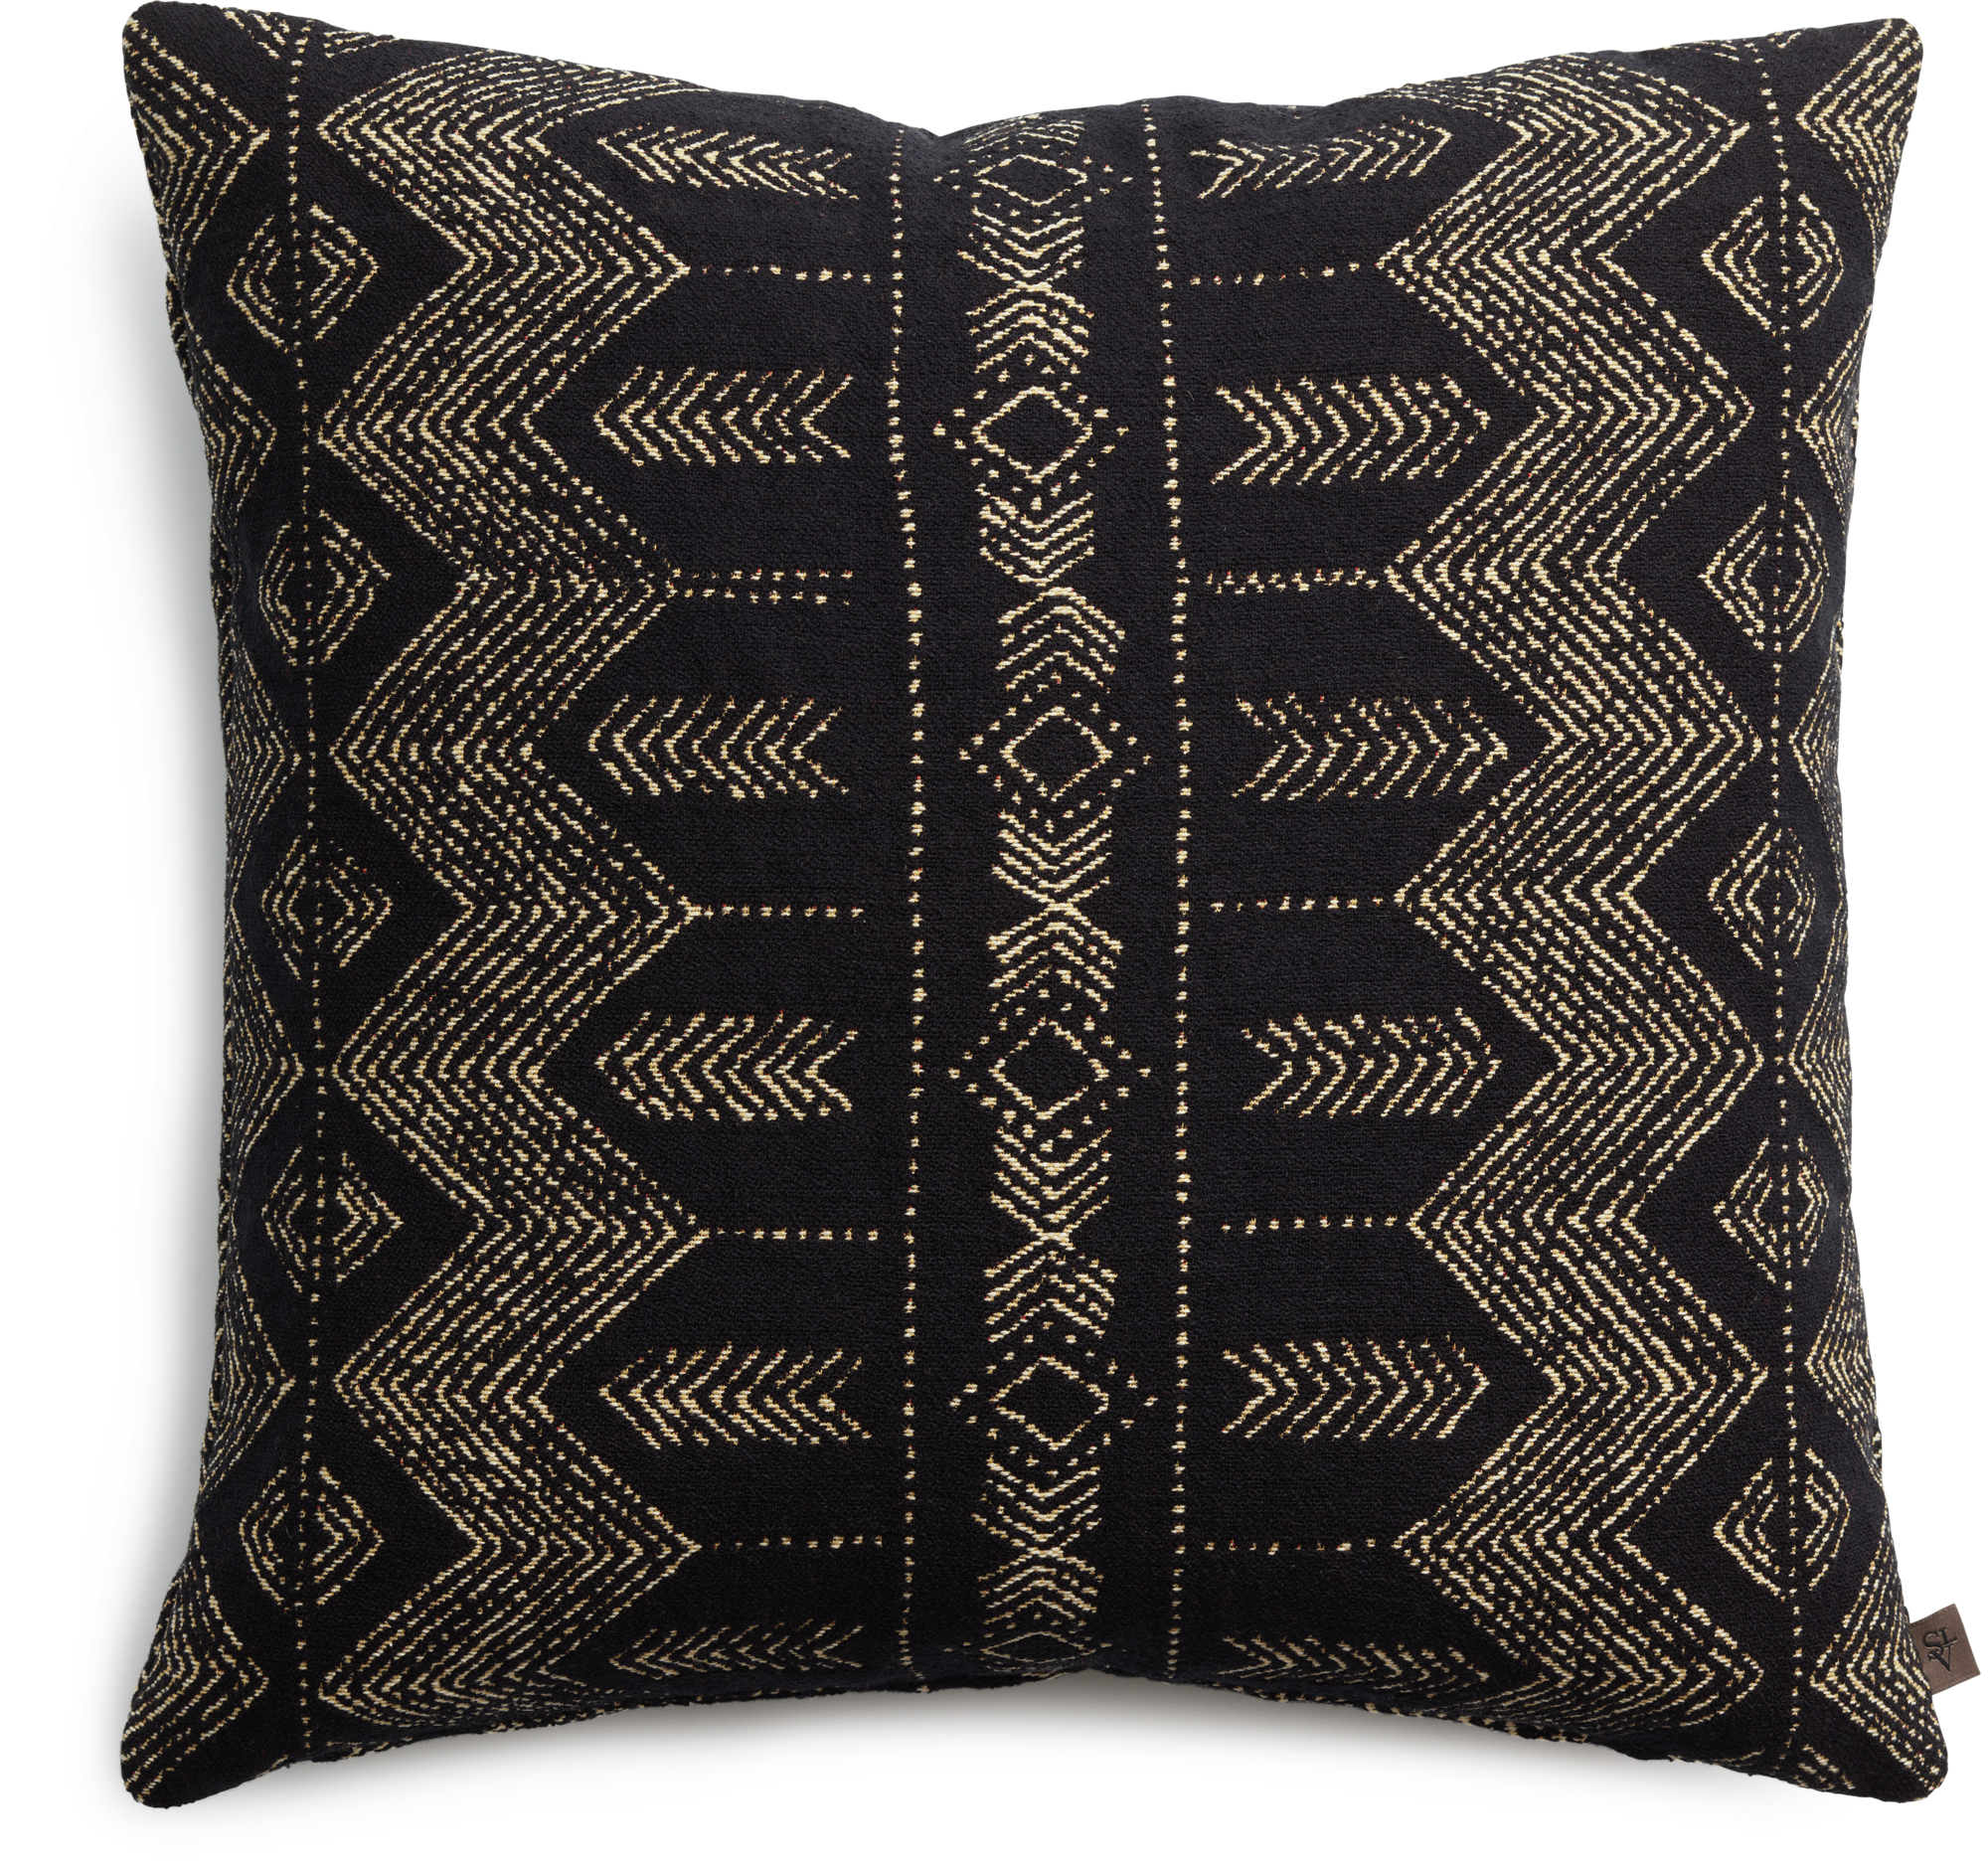 Cansetta decorative pillow